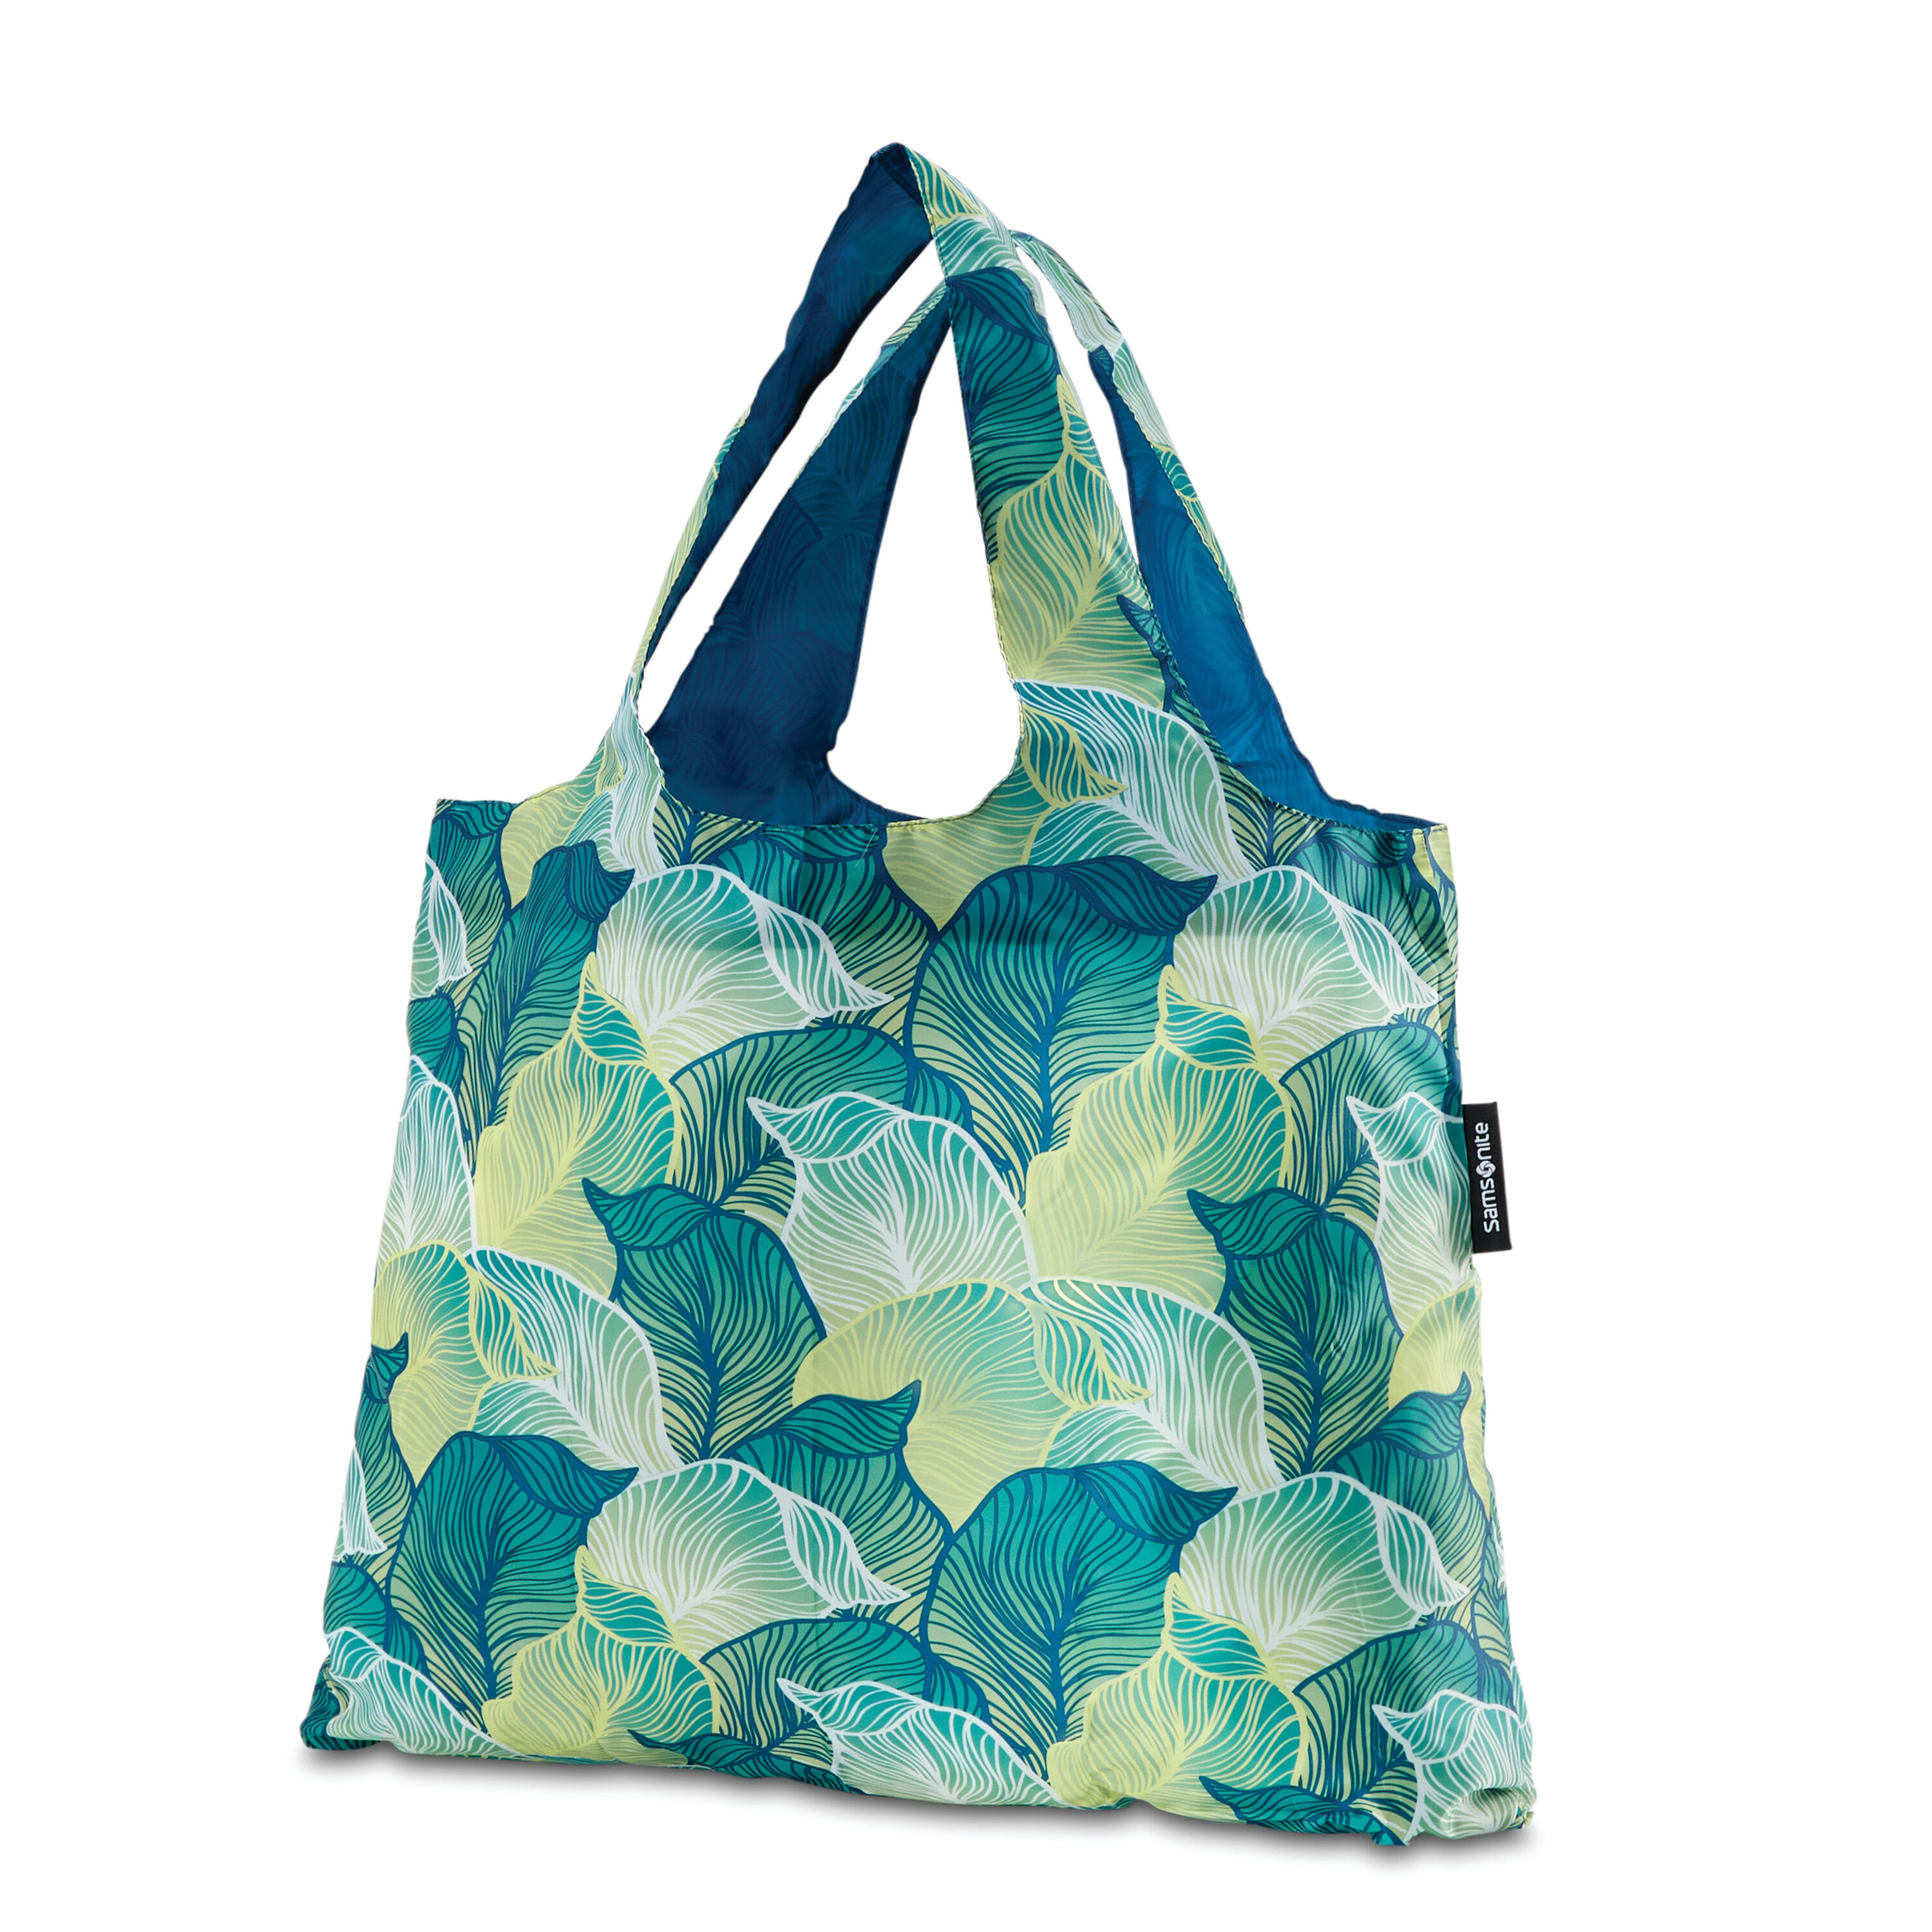 Samsonite Foldable Shopping Bag